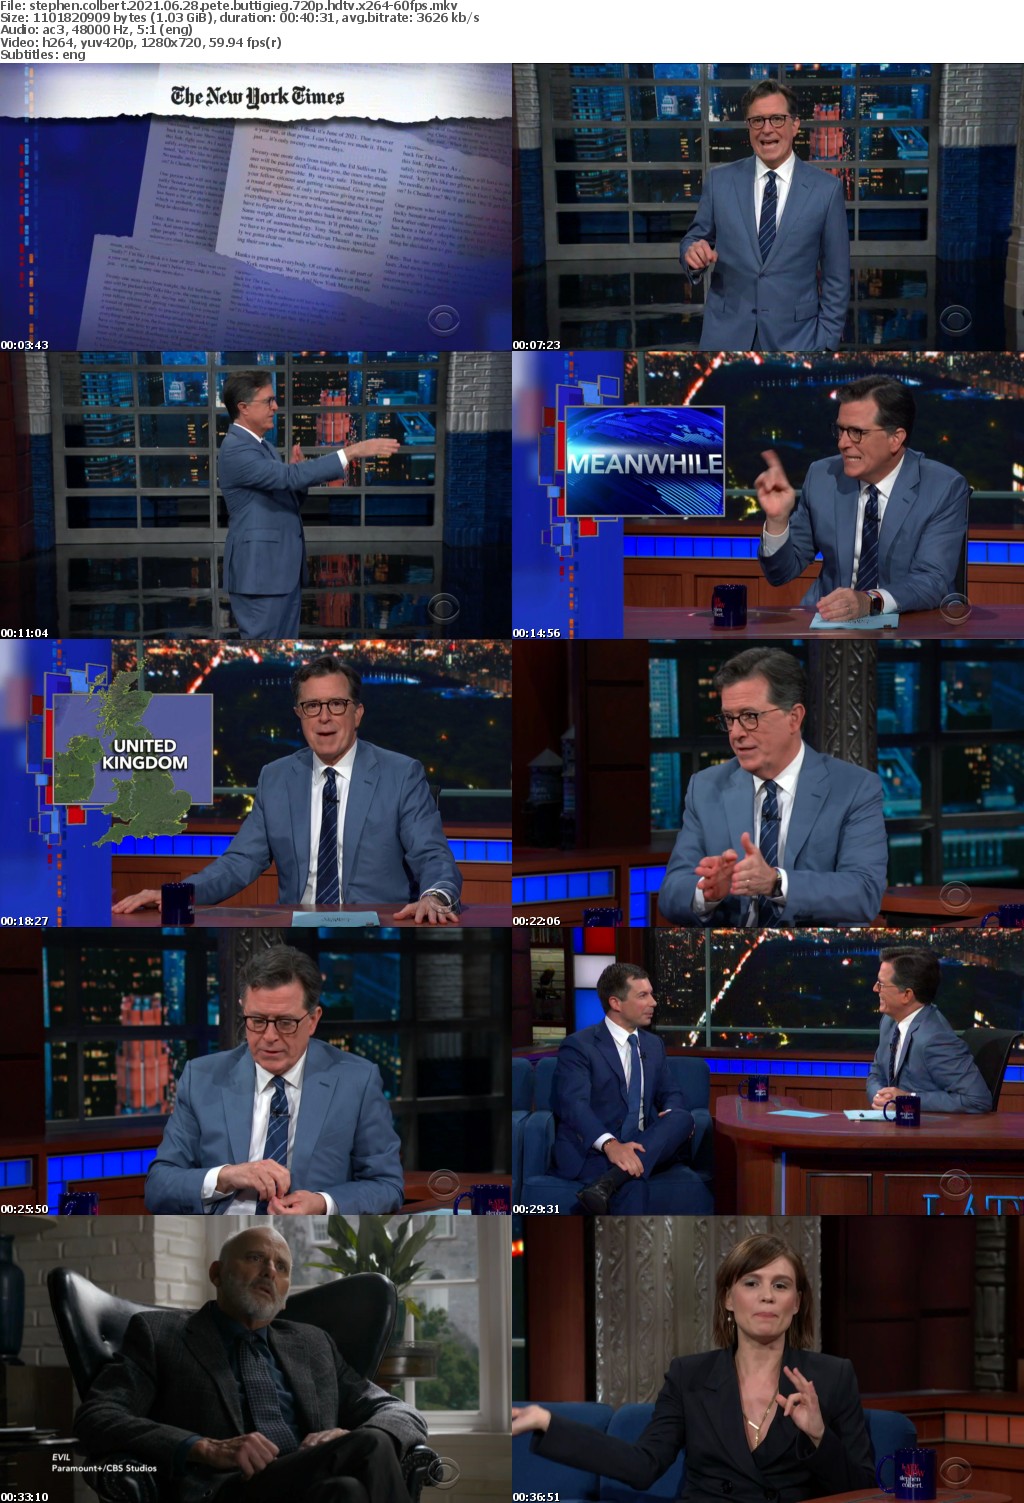 Stephen Colbert 2021 06 28 Pete Buttigieg 720p HDTV x264-60FPS